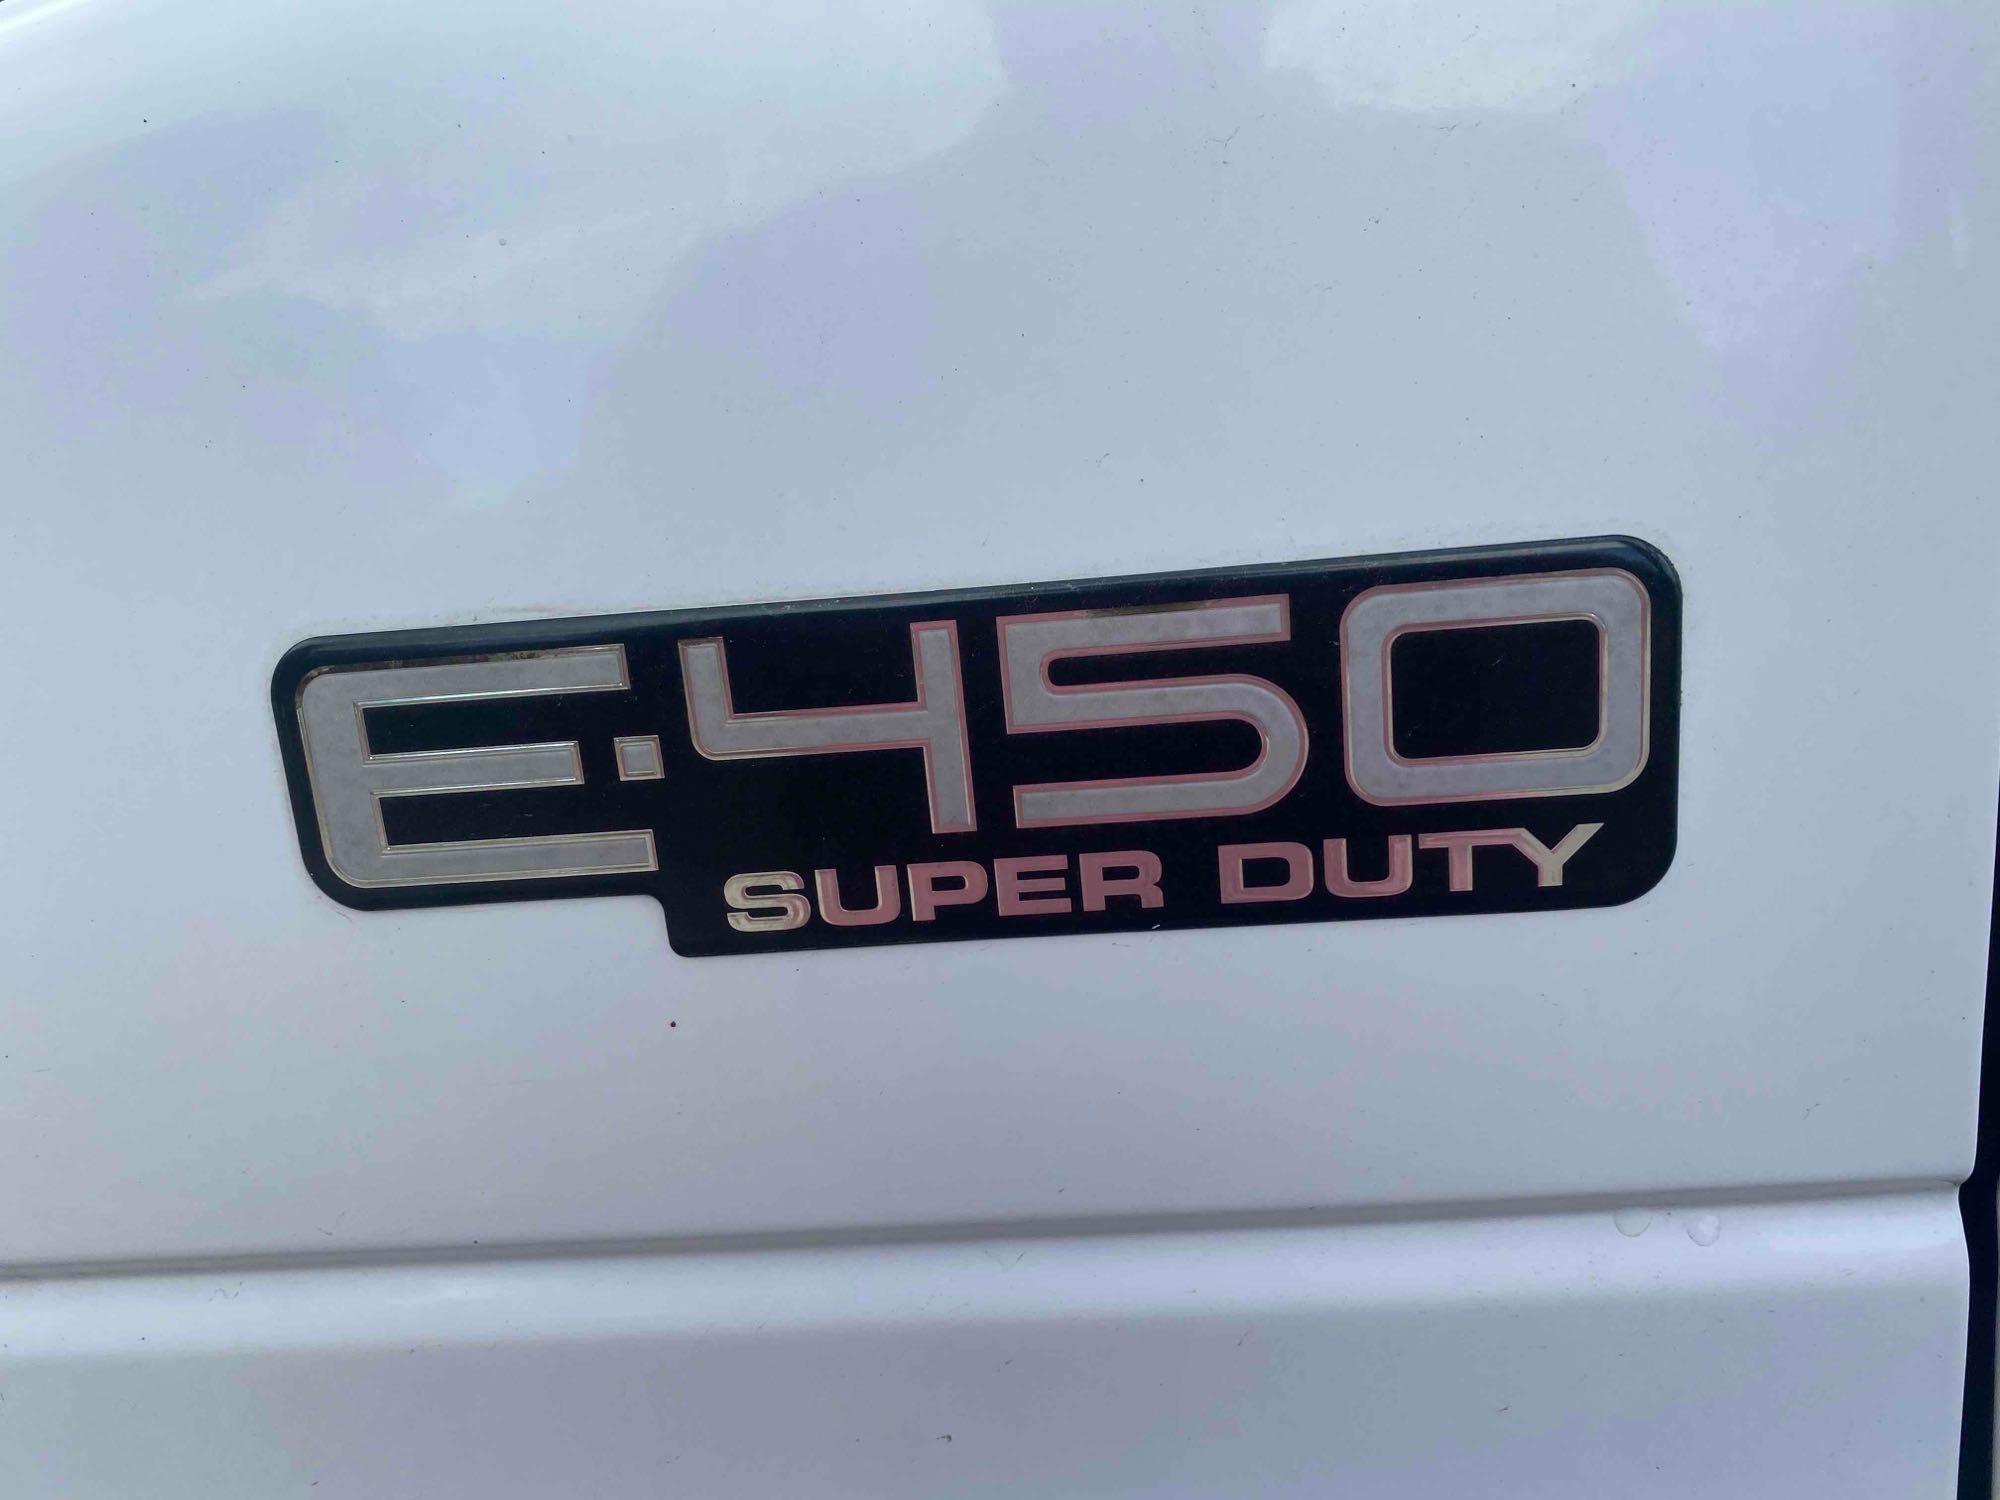 2004 Ford E-450 Super Duty Passenger Van, VIN # 1FDXE45PX4HA95845